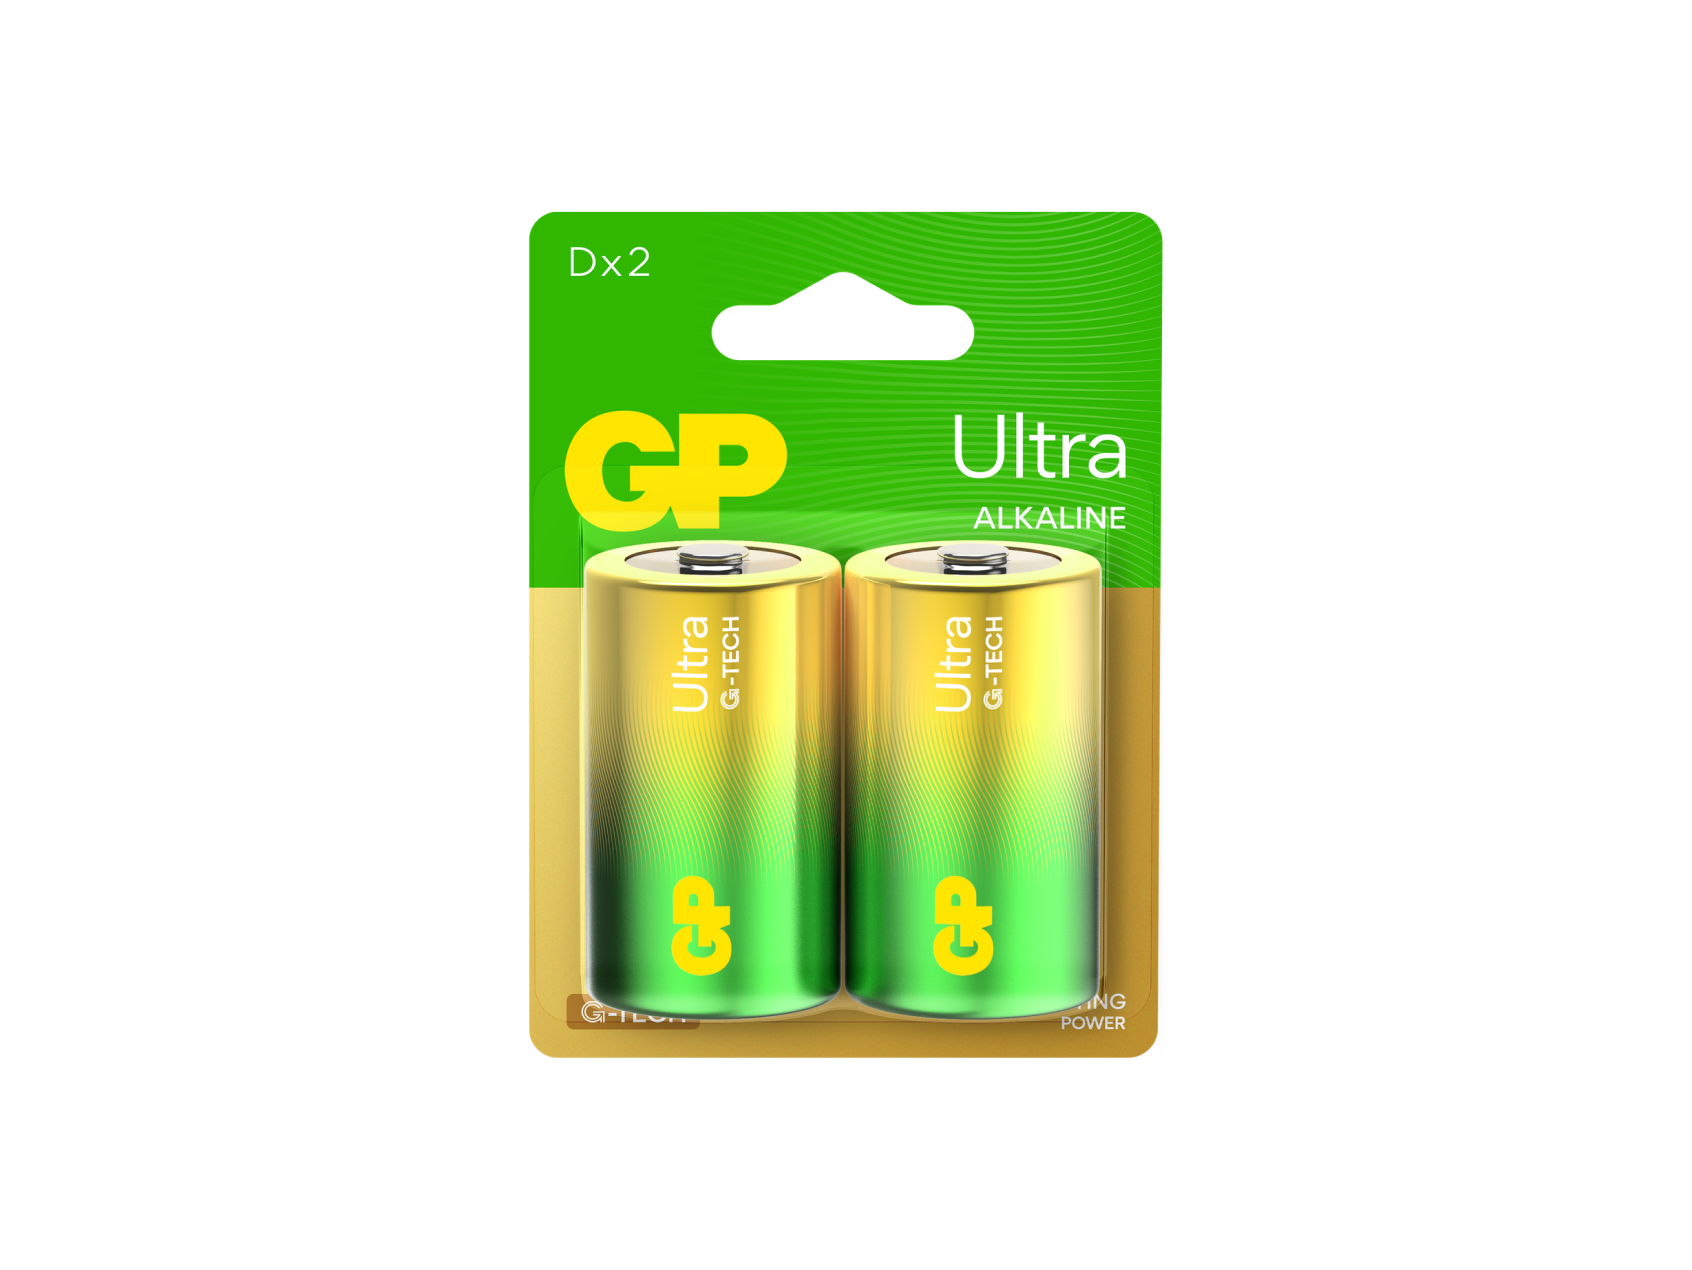 GP Ultra Alkaline D Size Batteries